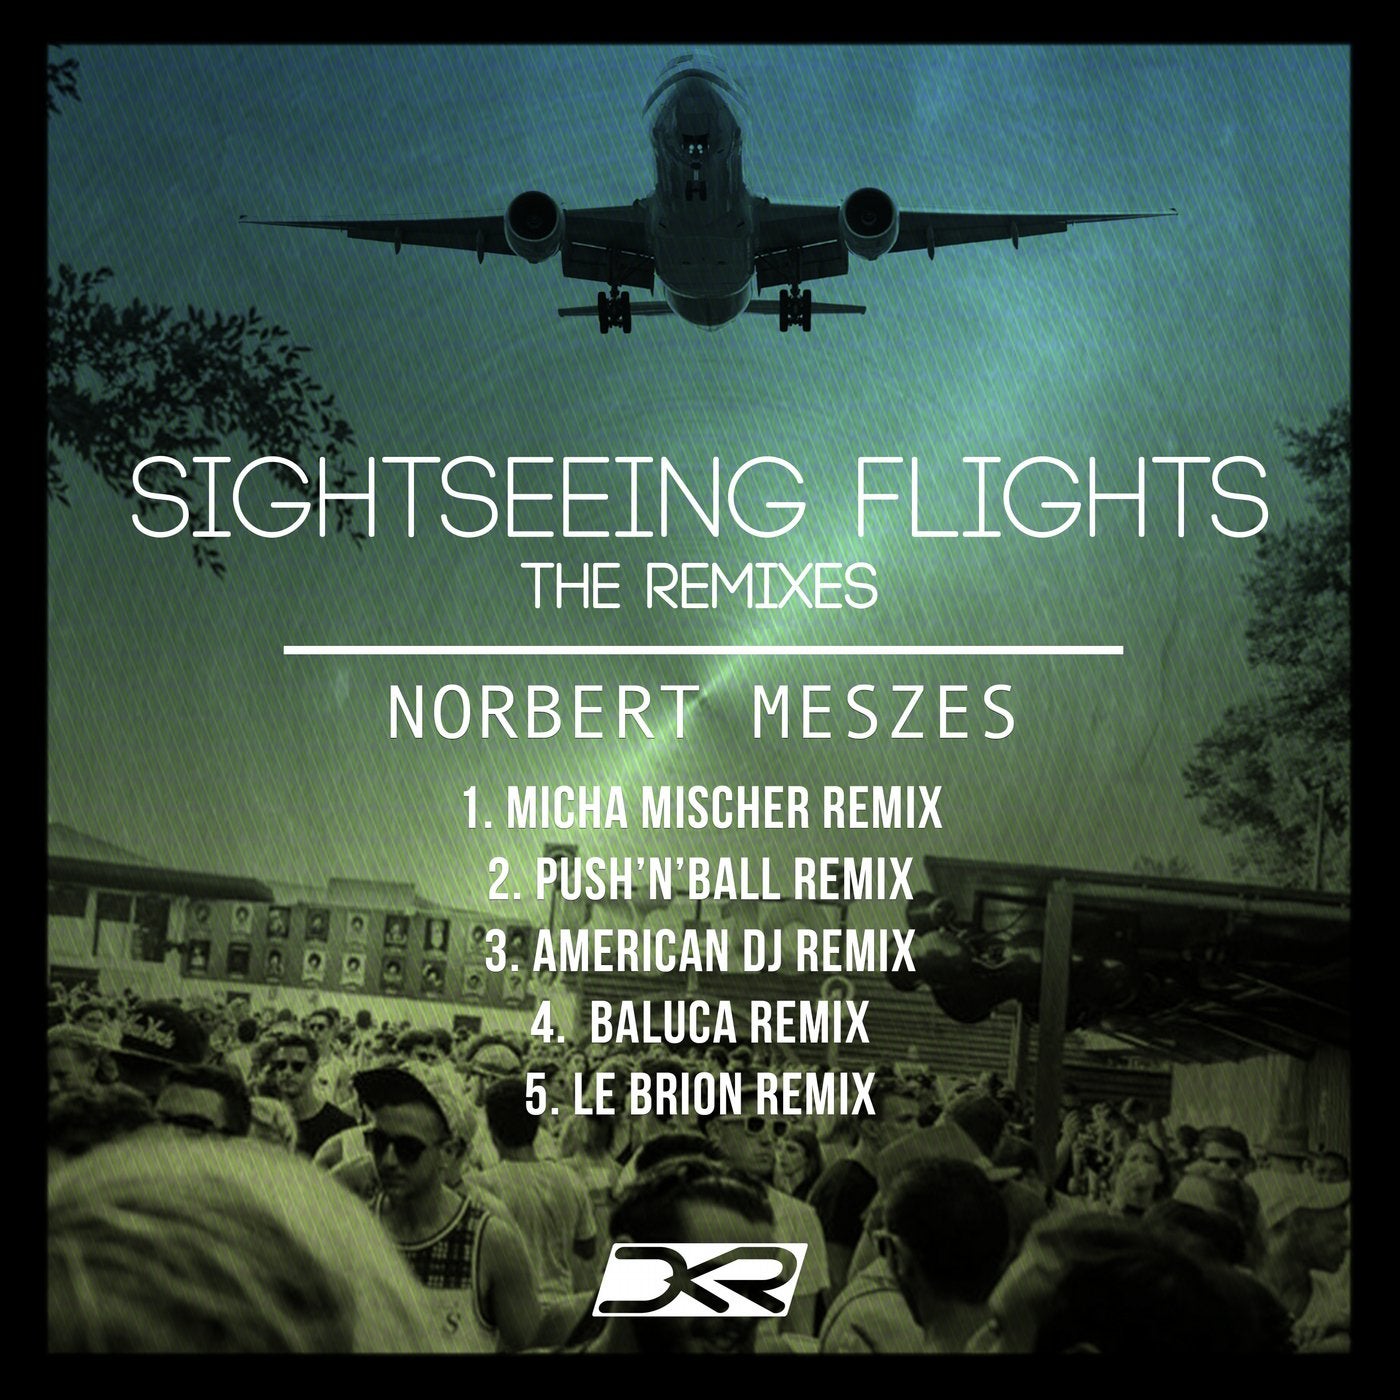 Sightseeing Flights - The Remixes